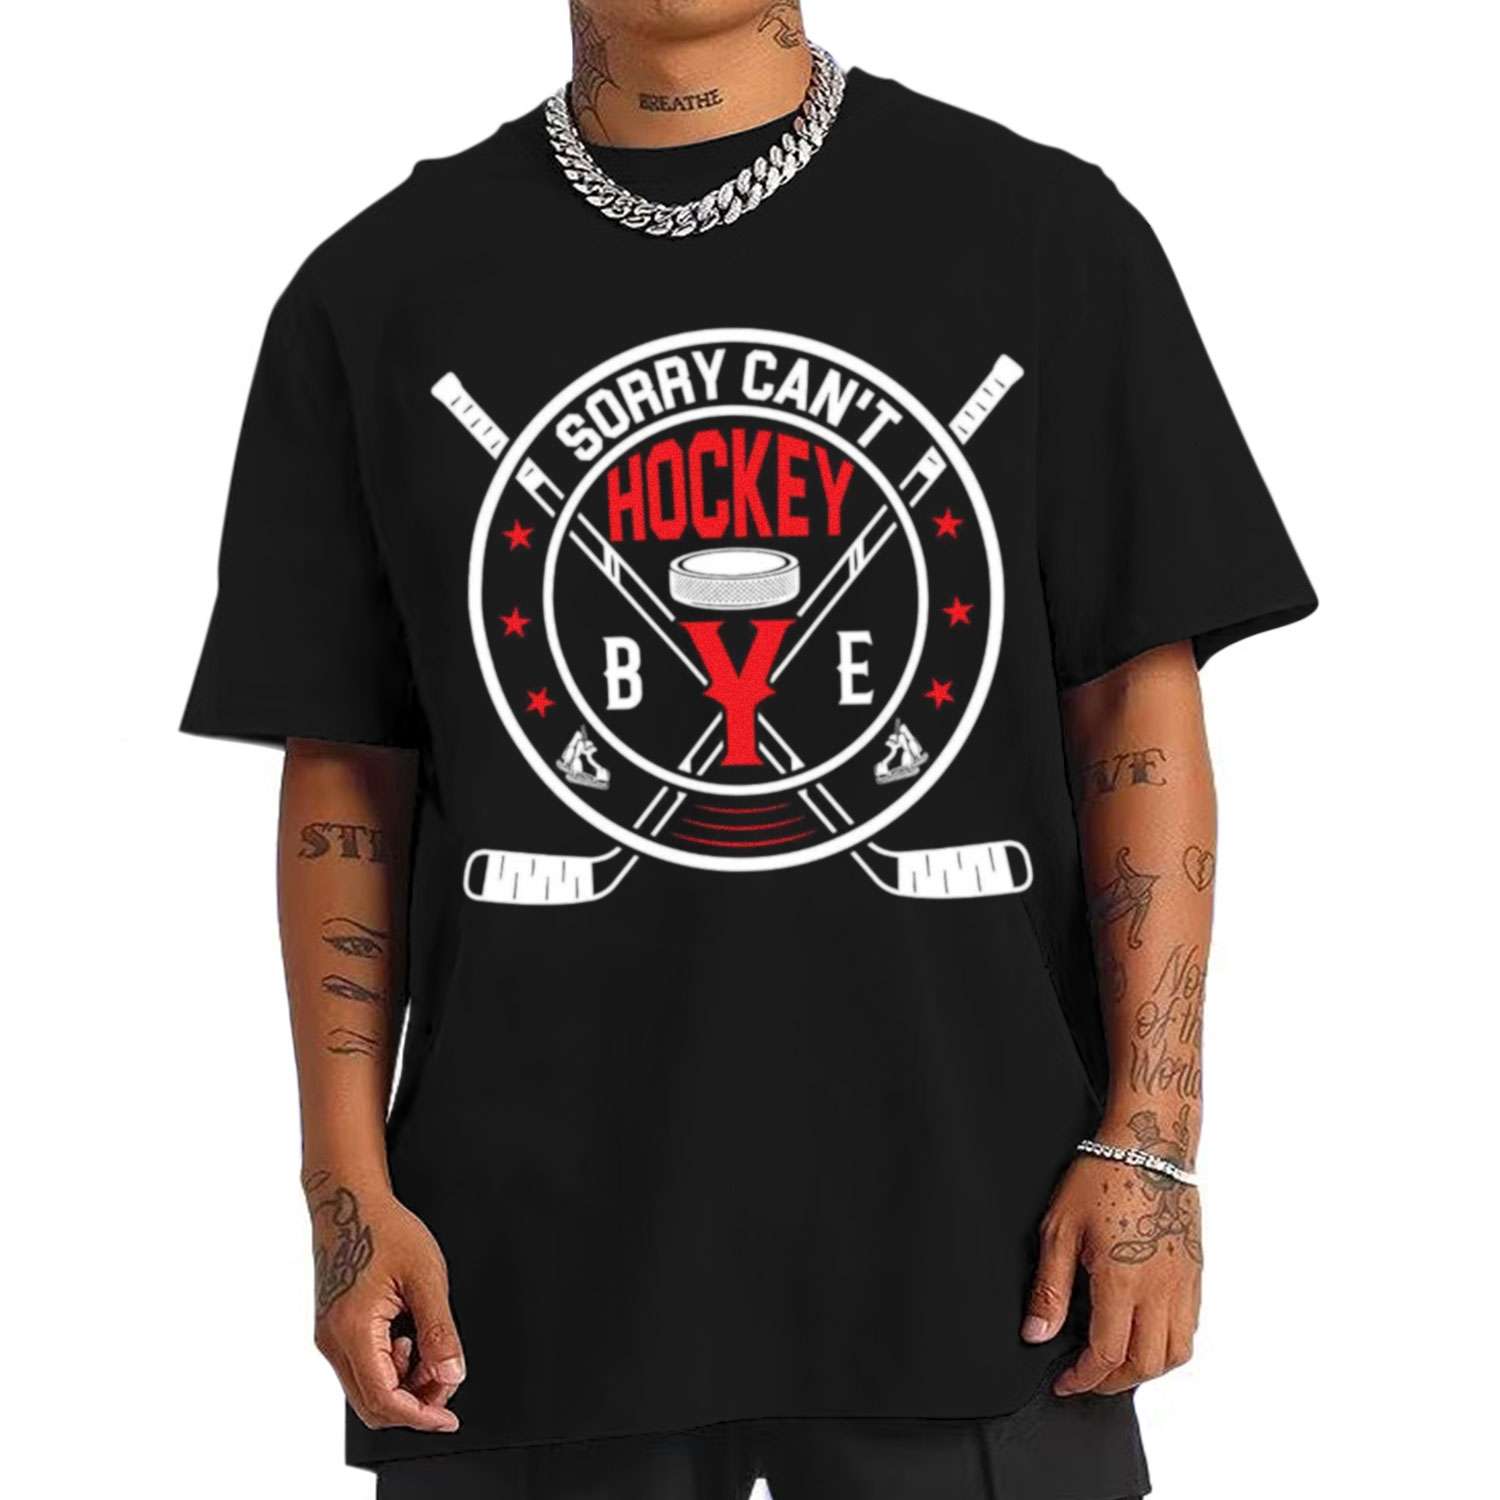 Sorry Can'T Hockey Bye T-shirt